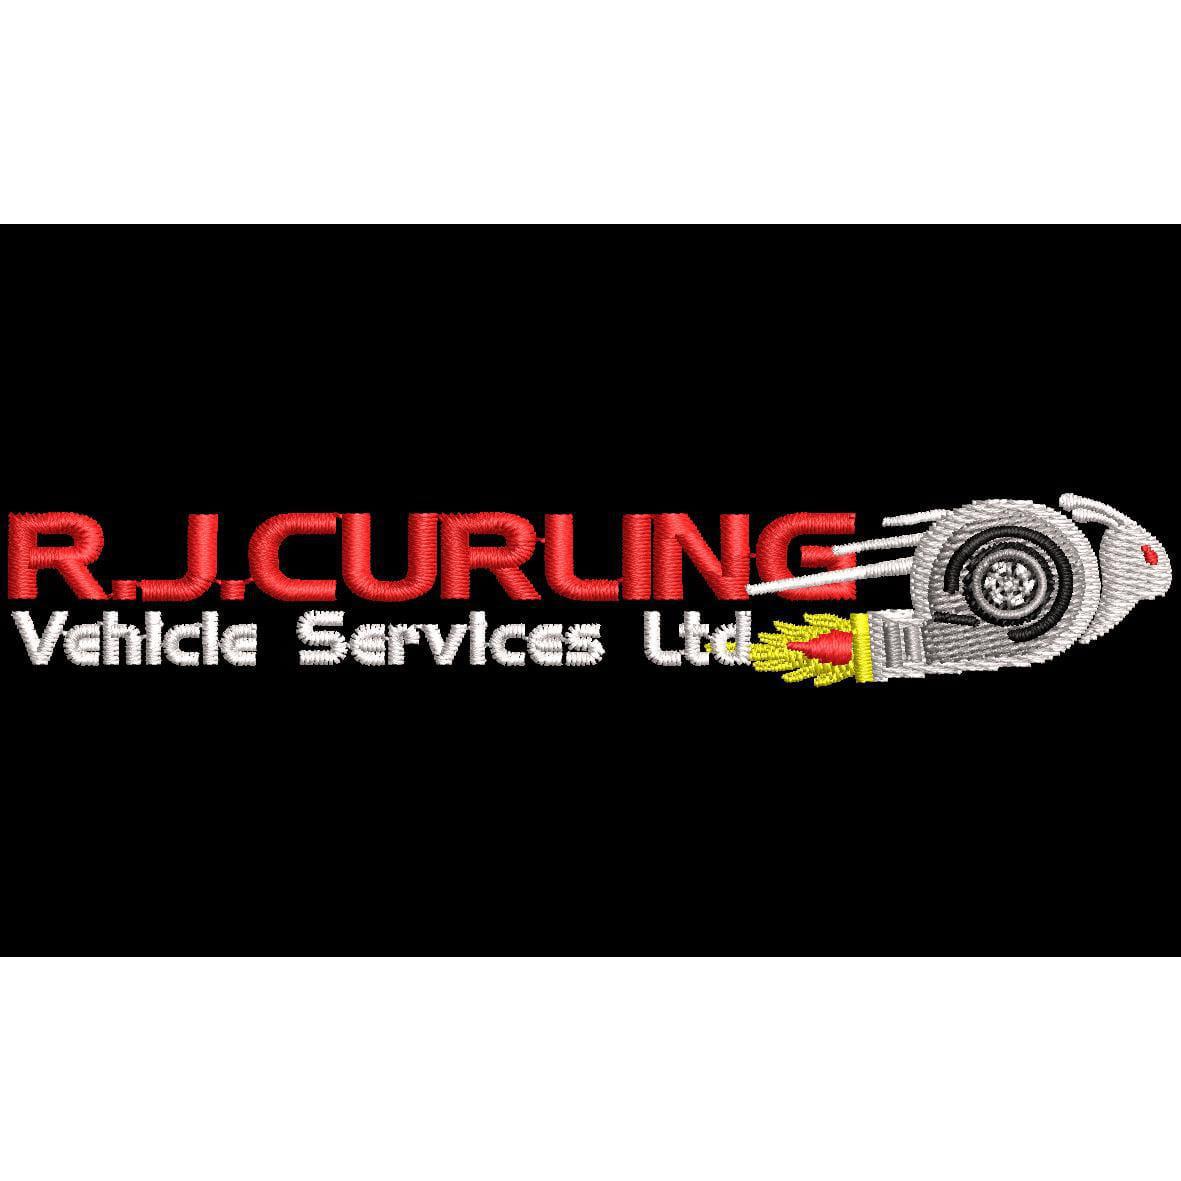 R J Curling Vehicle Services Ltd Logo